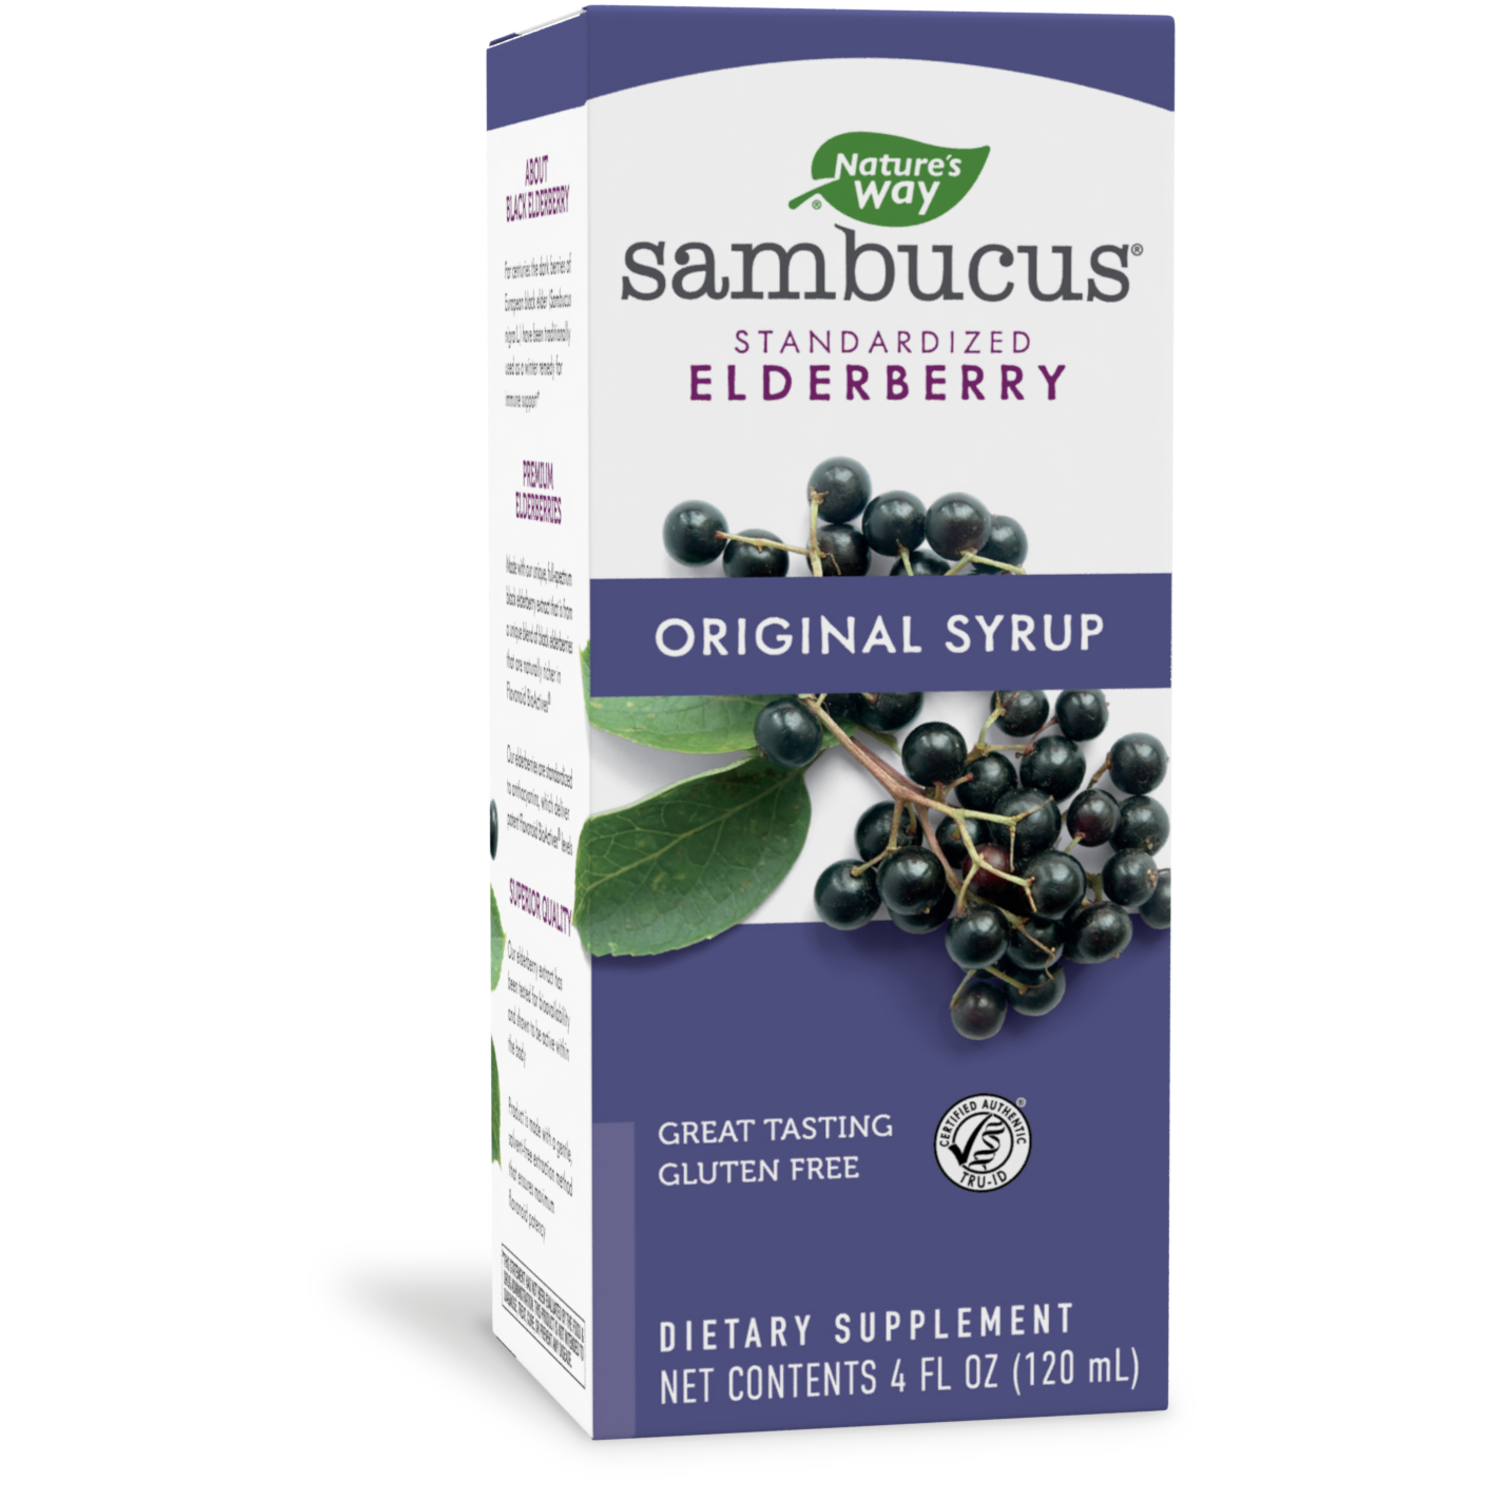 Nature’s Way Sambucus Original Elderberry Syrup, Black Elderberry Extract, Traditional Immune Support*, Delicious Berry Flavor, 4 Fl Oz. - image 1 of 5